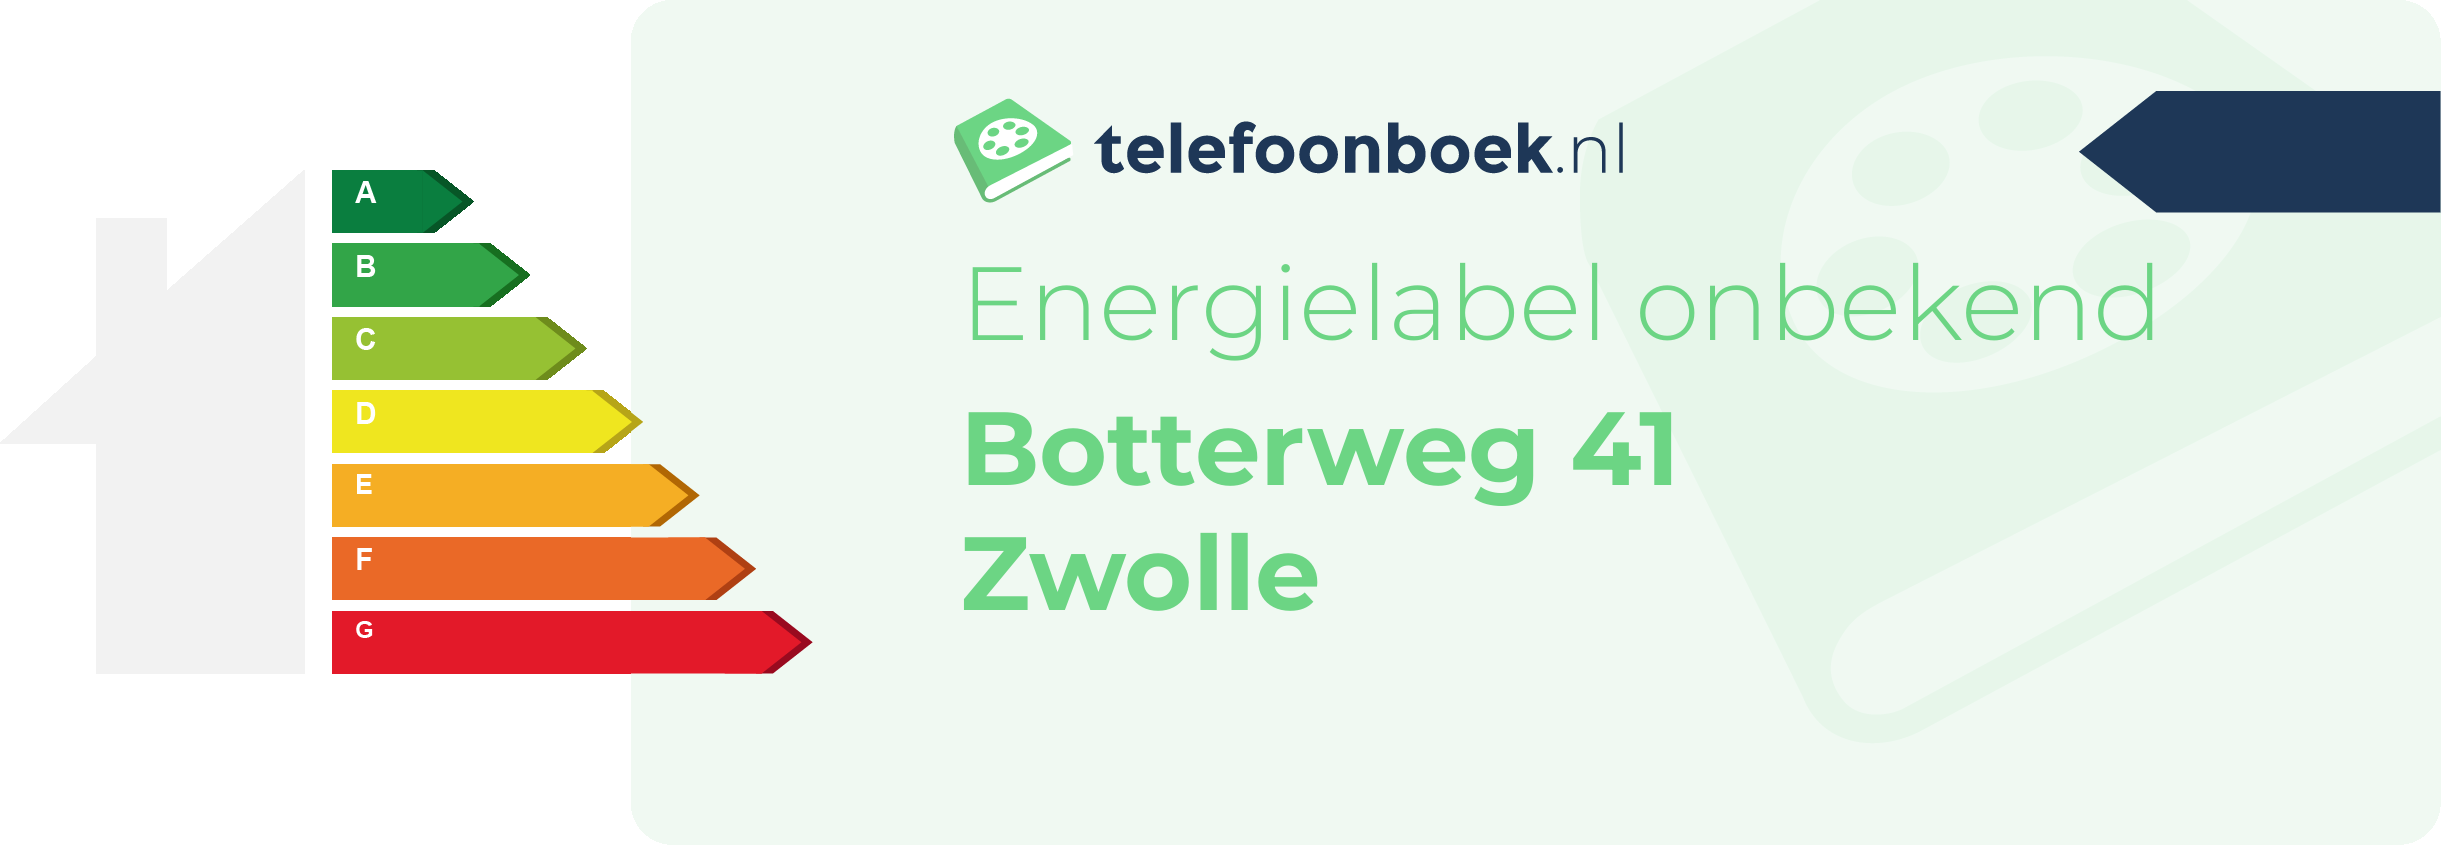 Energielabel Botterweg 41 Zwolle